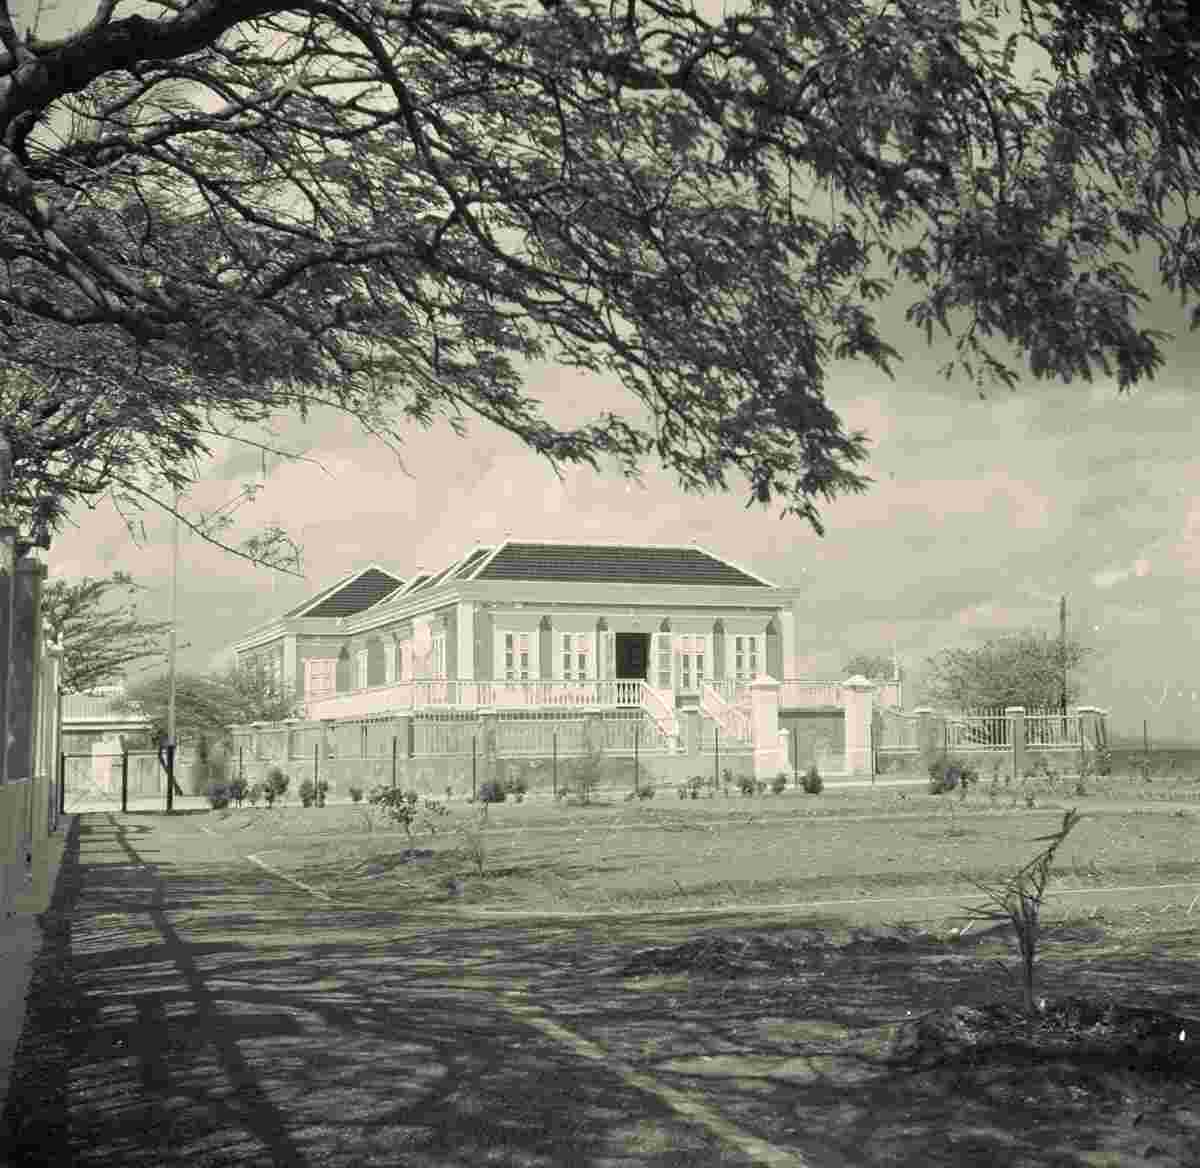 Kralendijk. The government office building on Wilhelmina Square, 1947